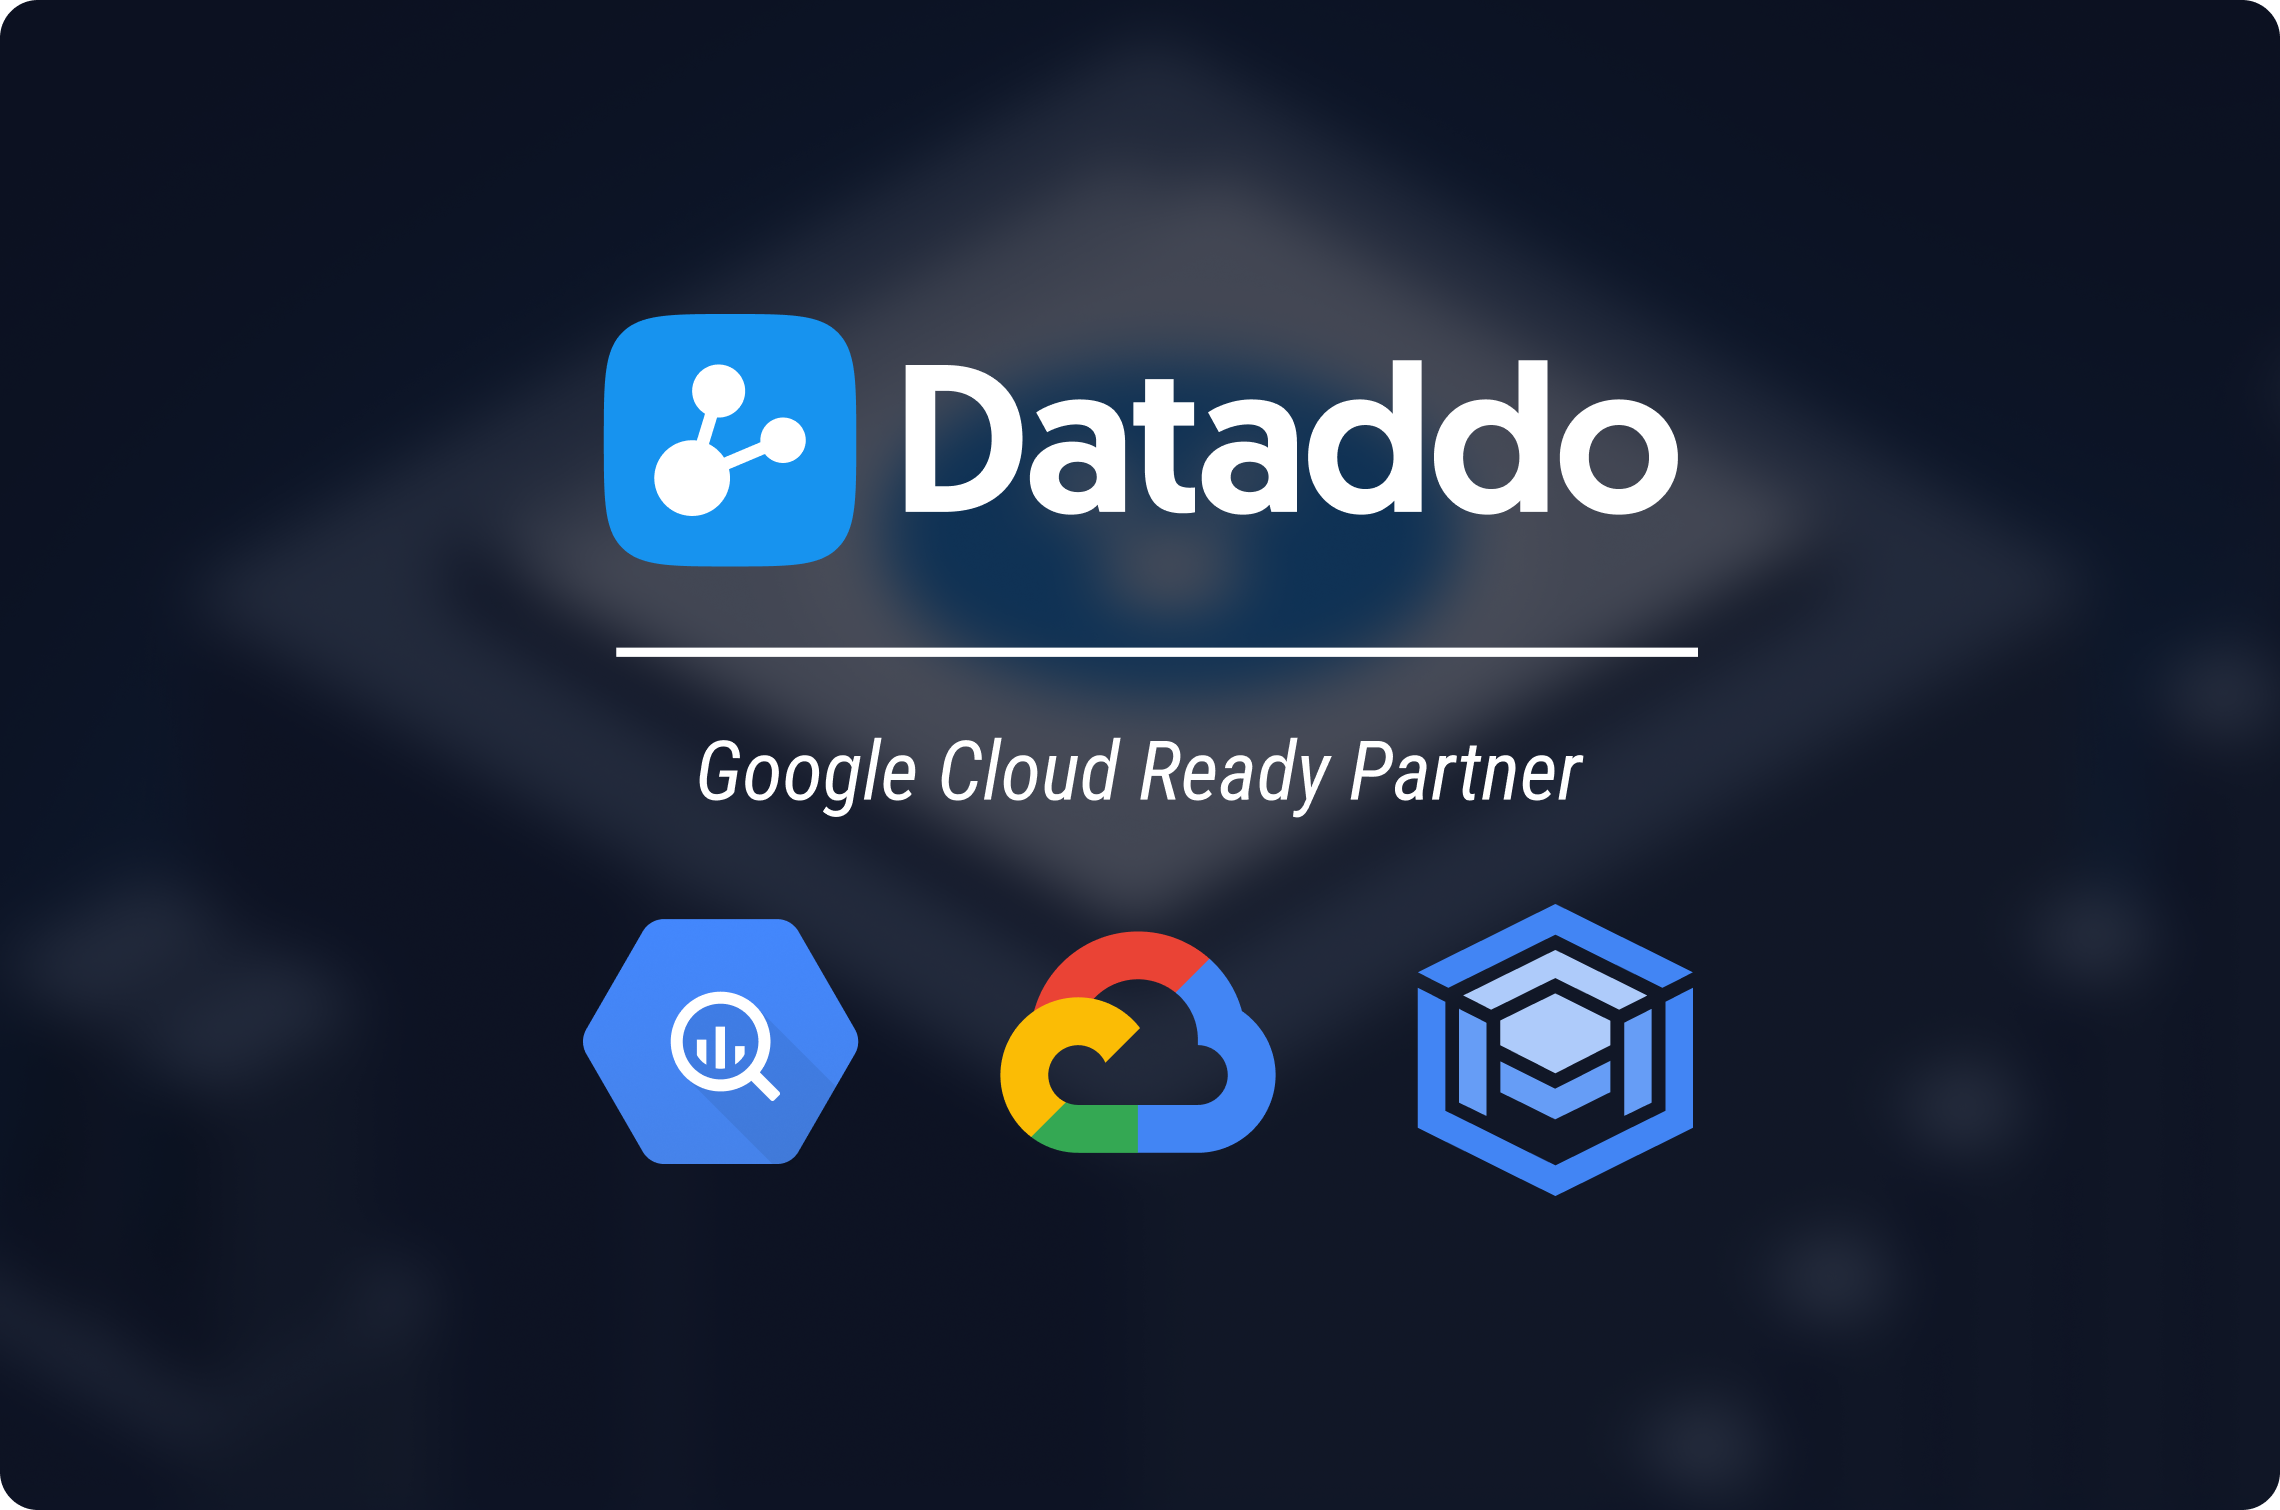 Dataddo Recognized as Google Cloud Ready Partner